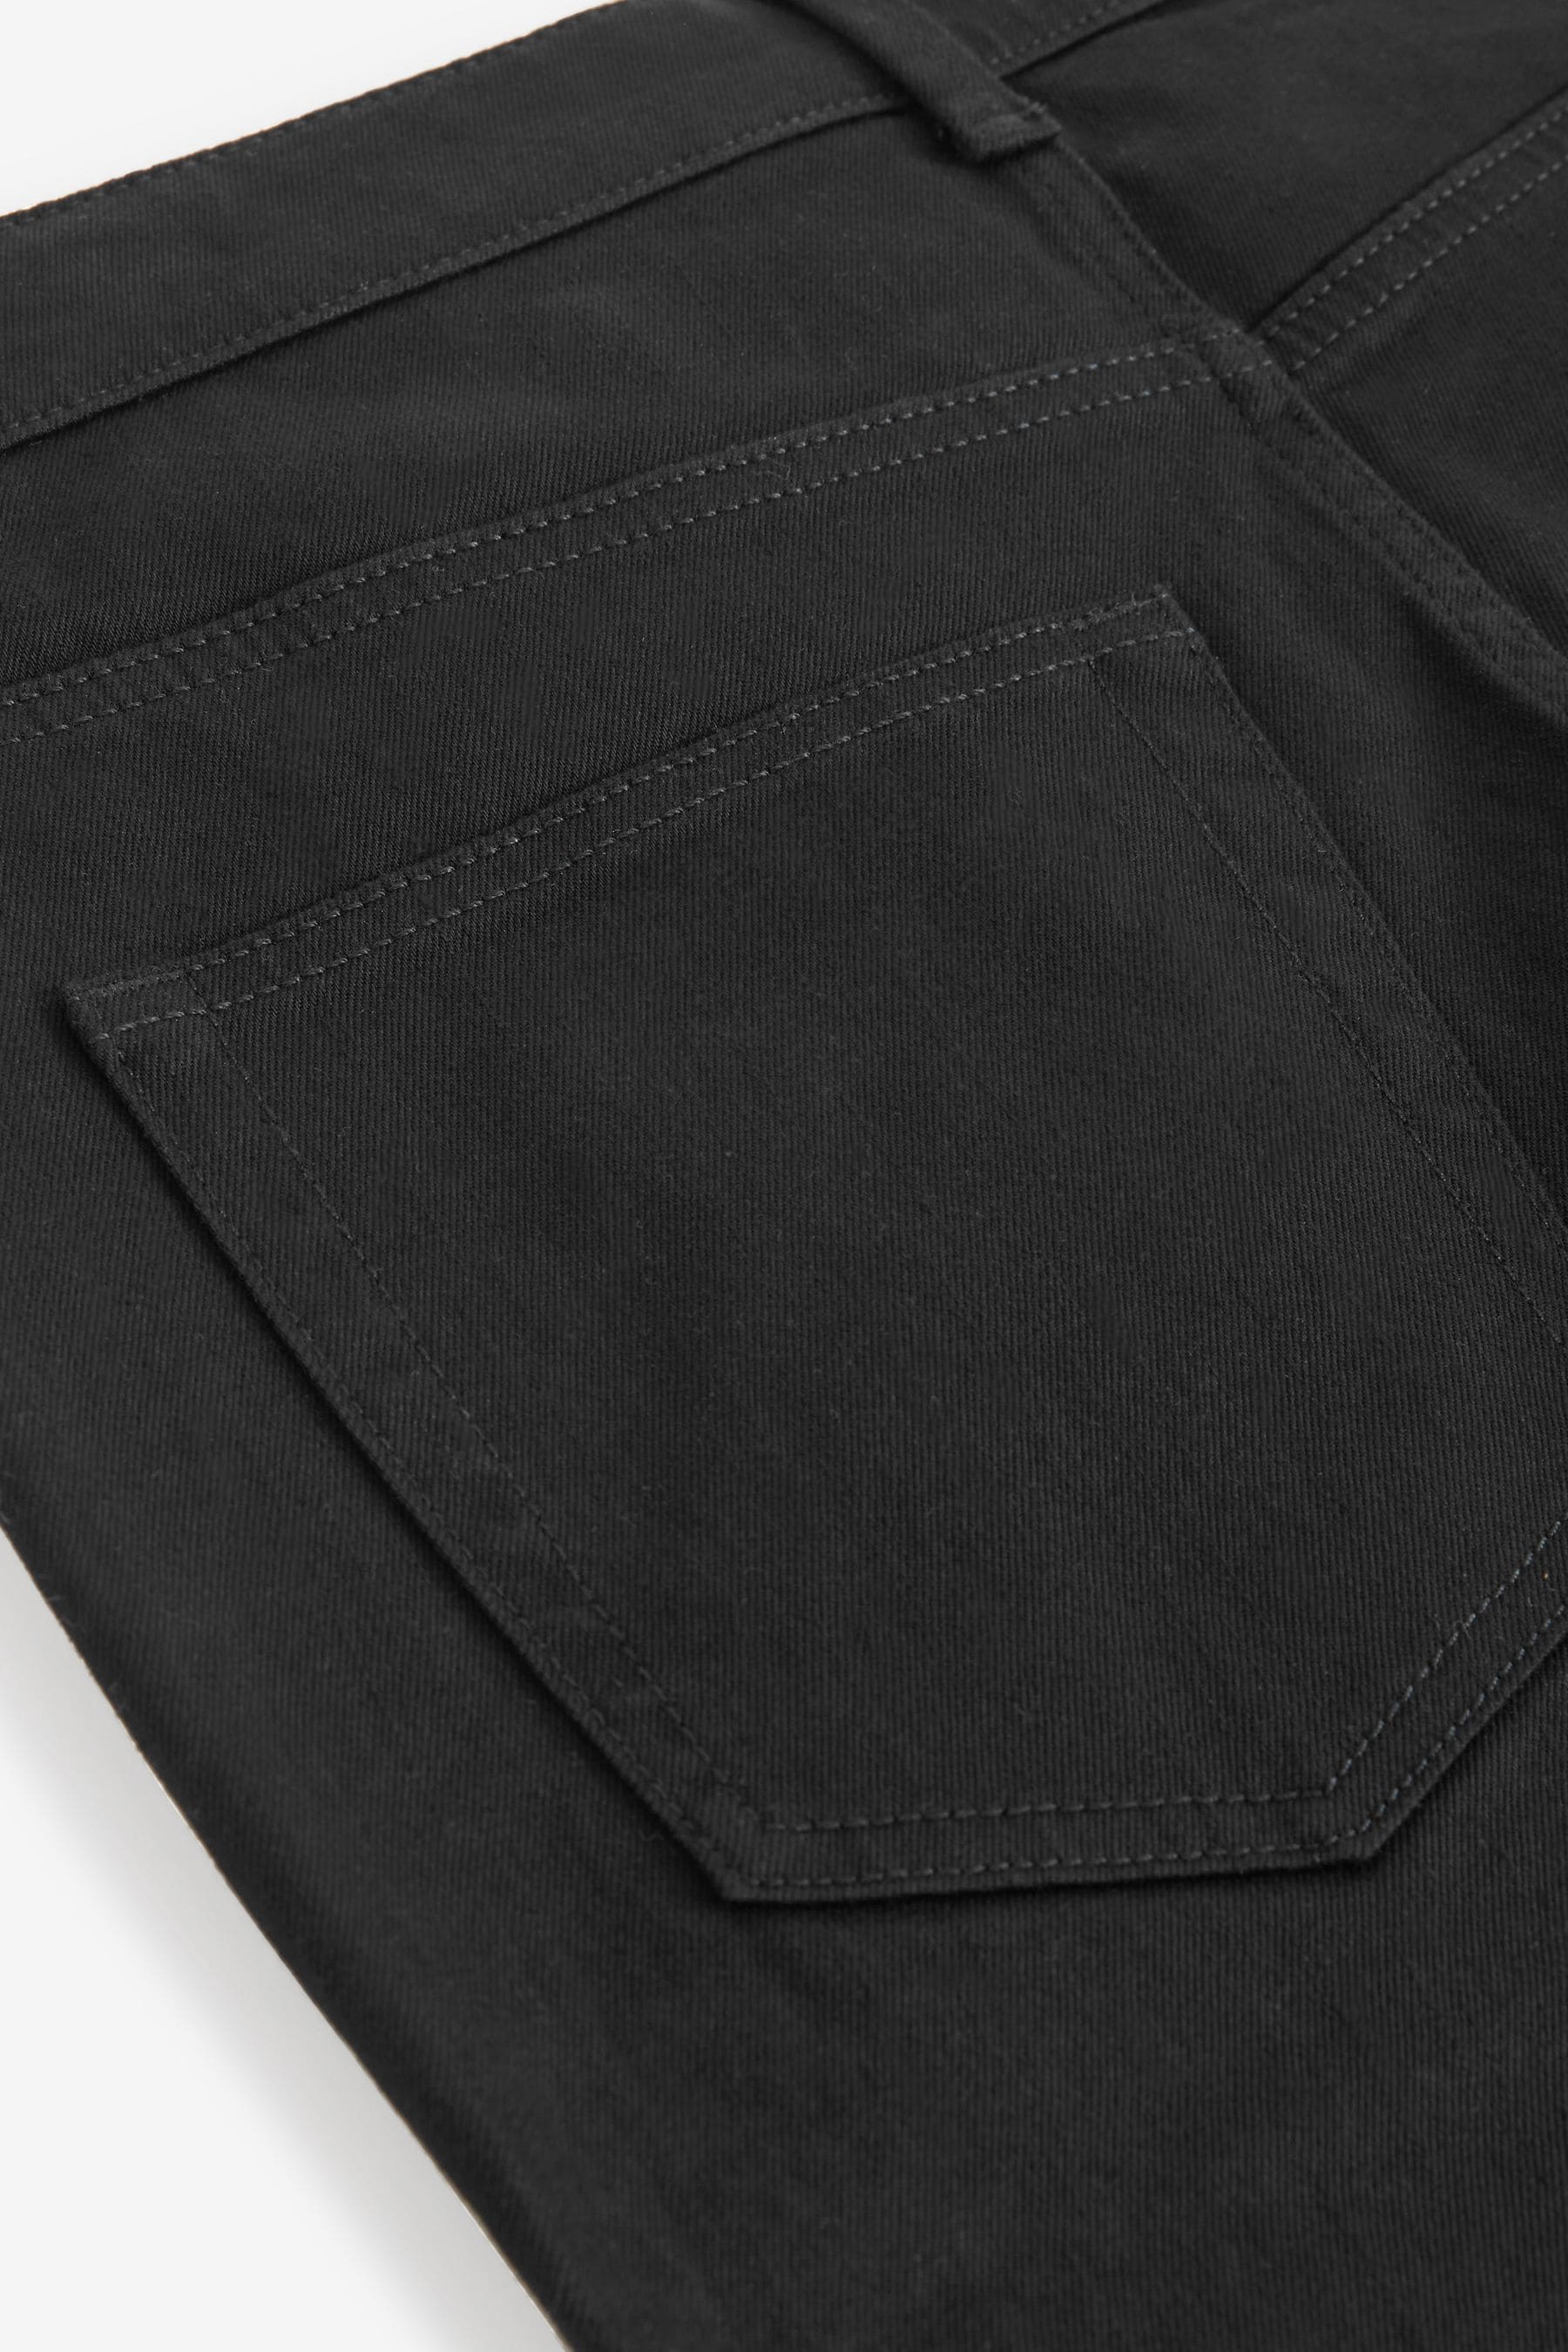 Buy Black Skinny Fit Stretch Denim Shorts from the Next UK online shop